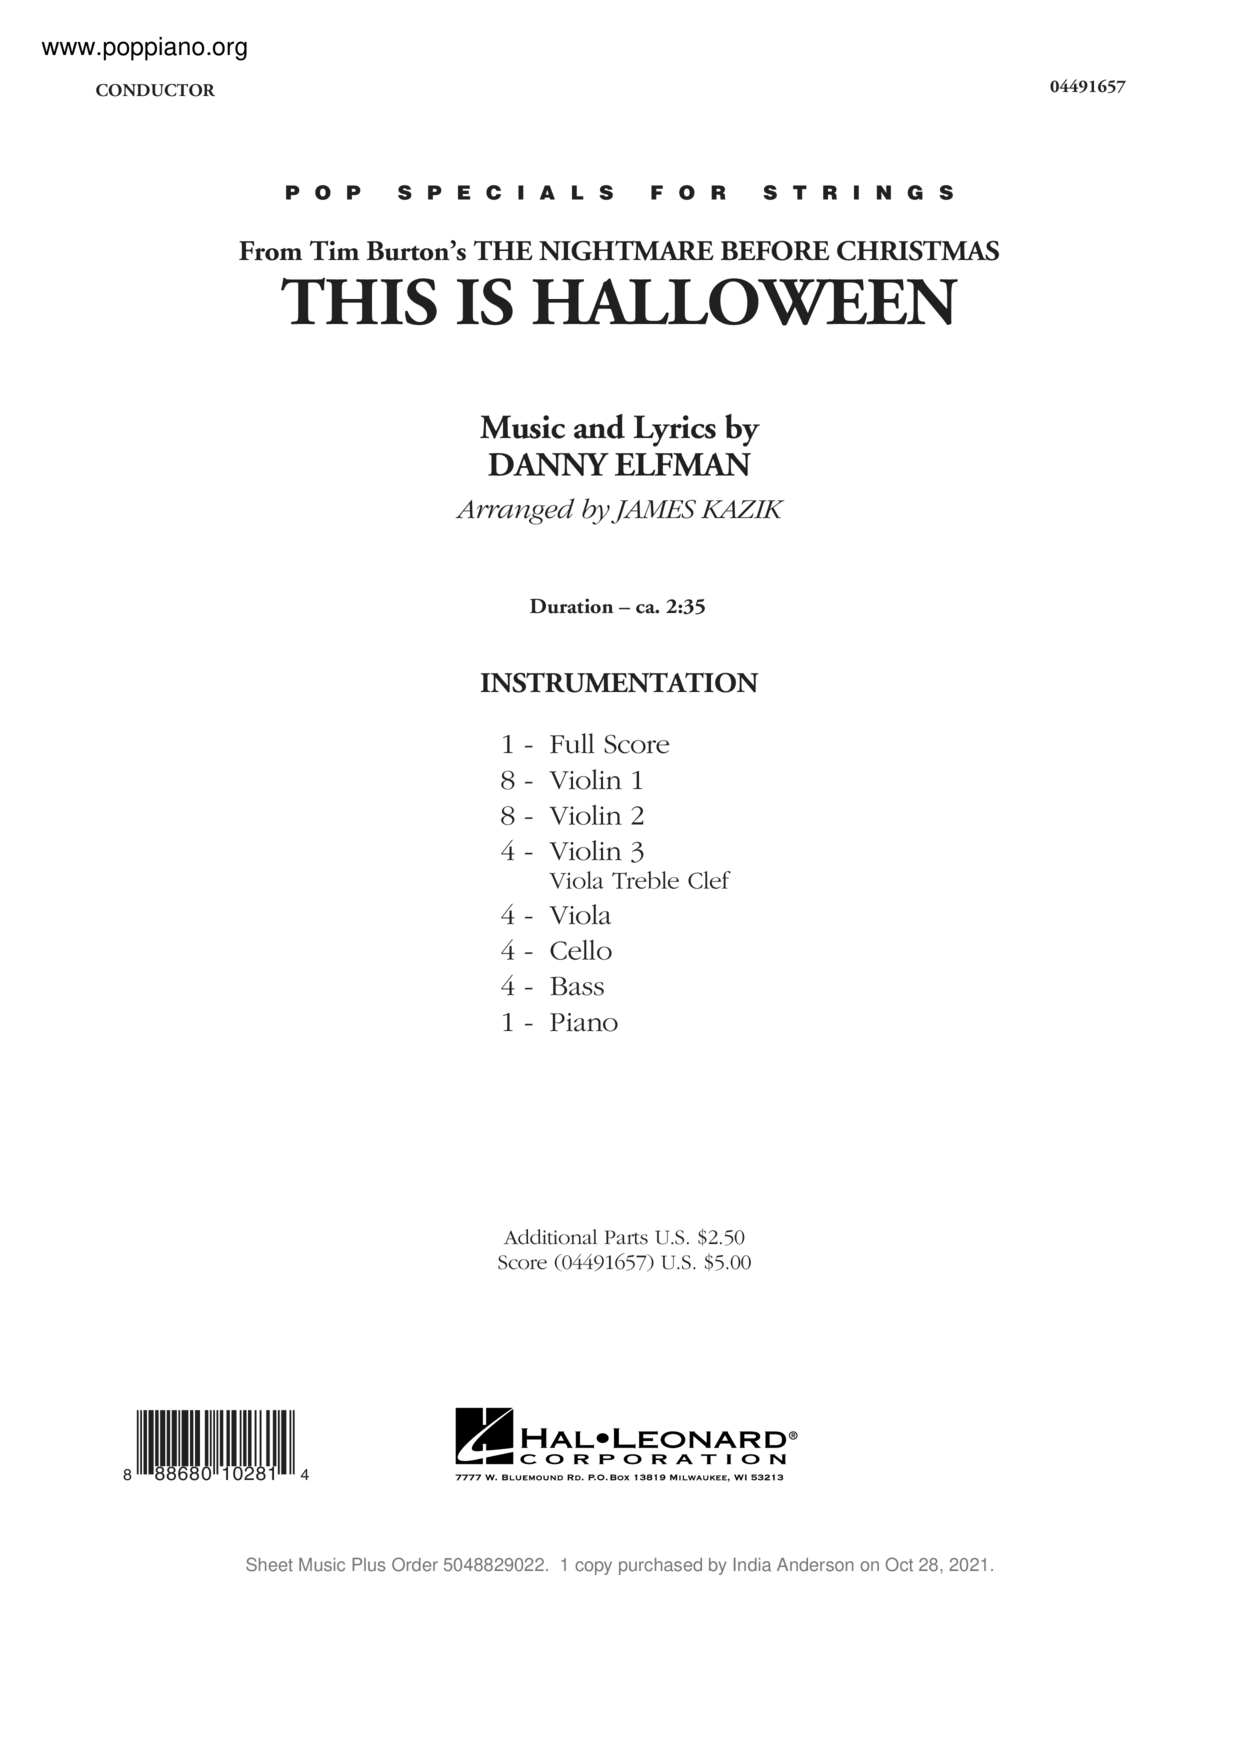 This Is Halloween Score